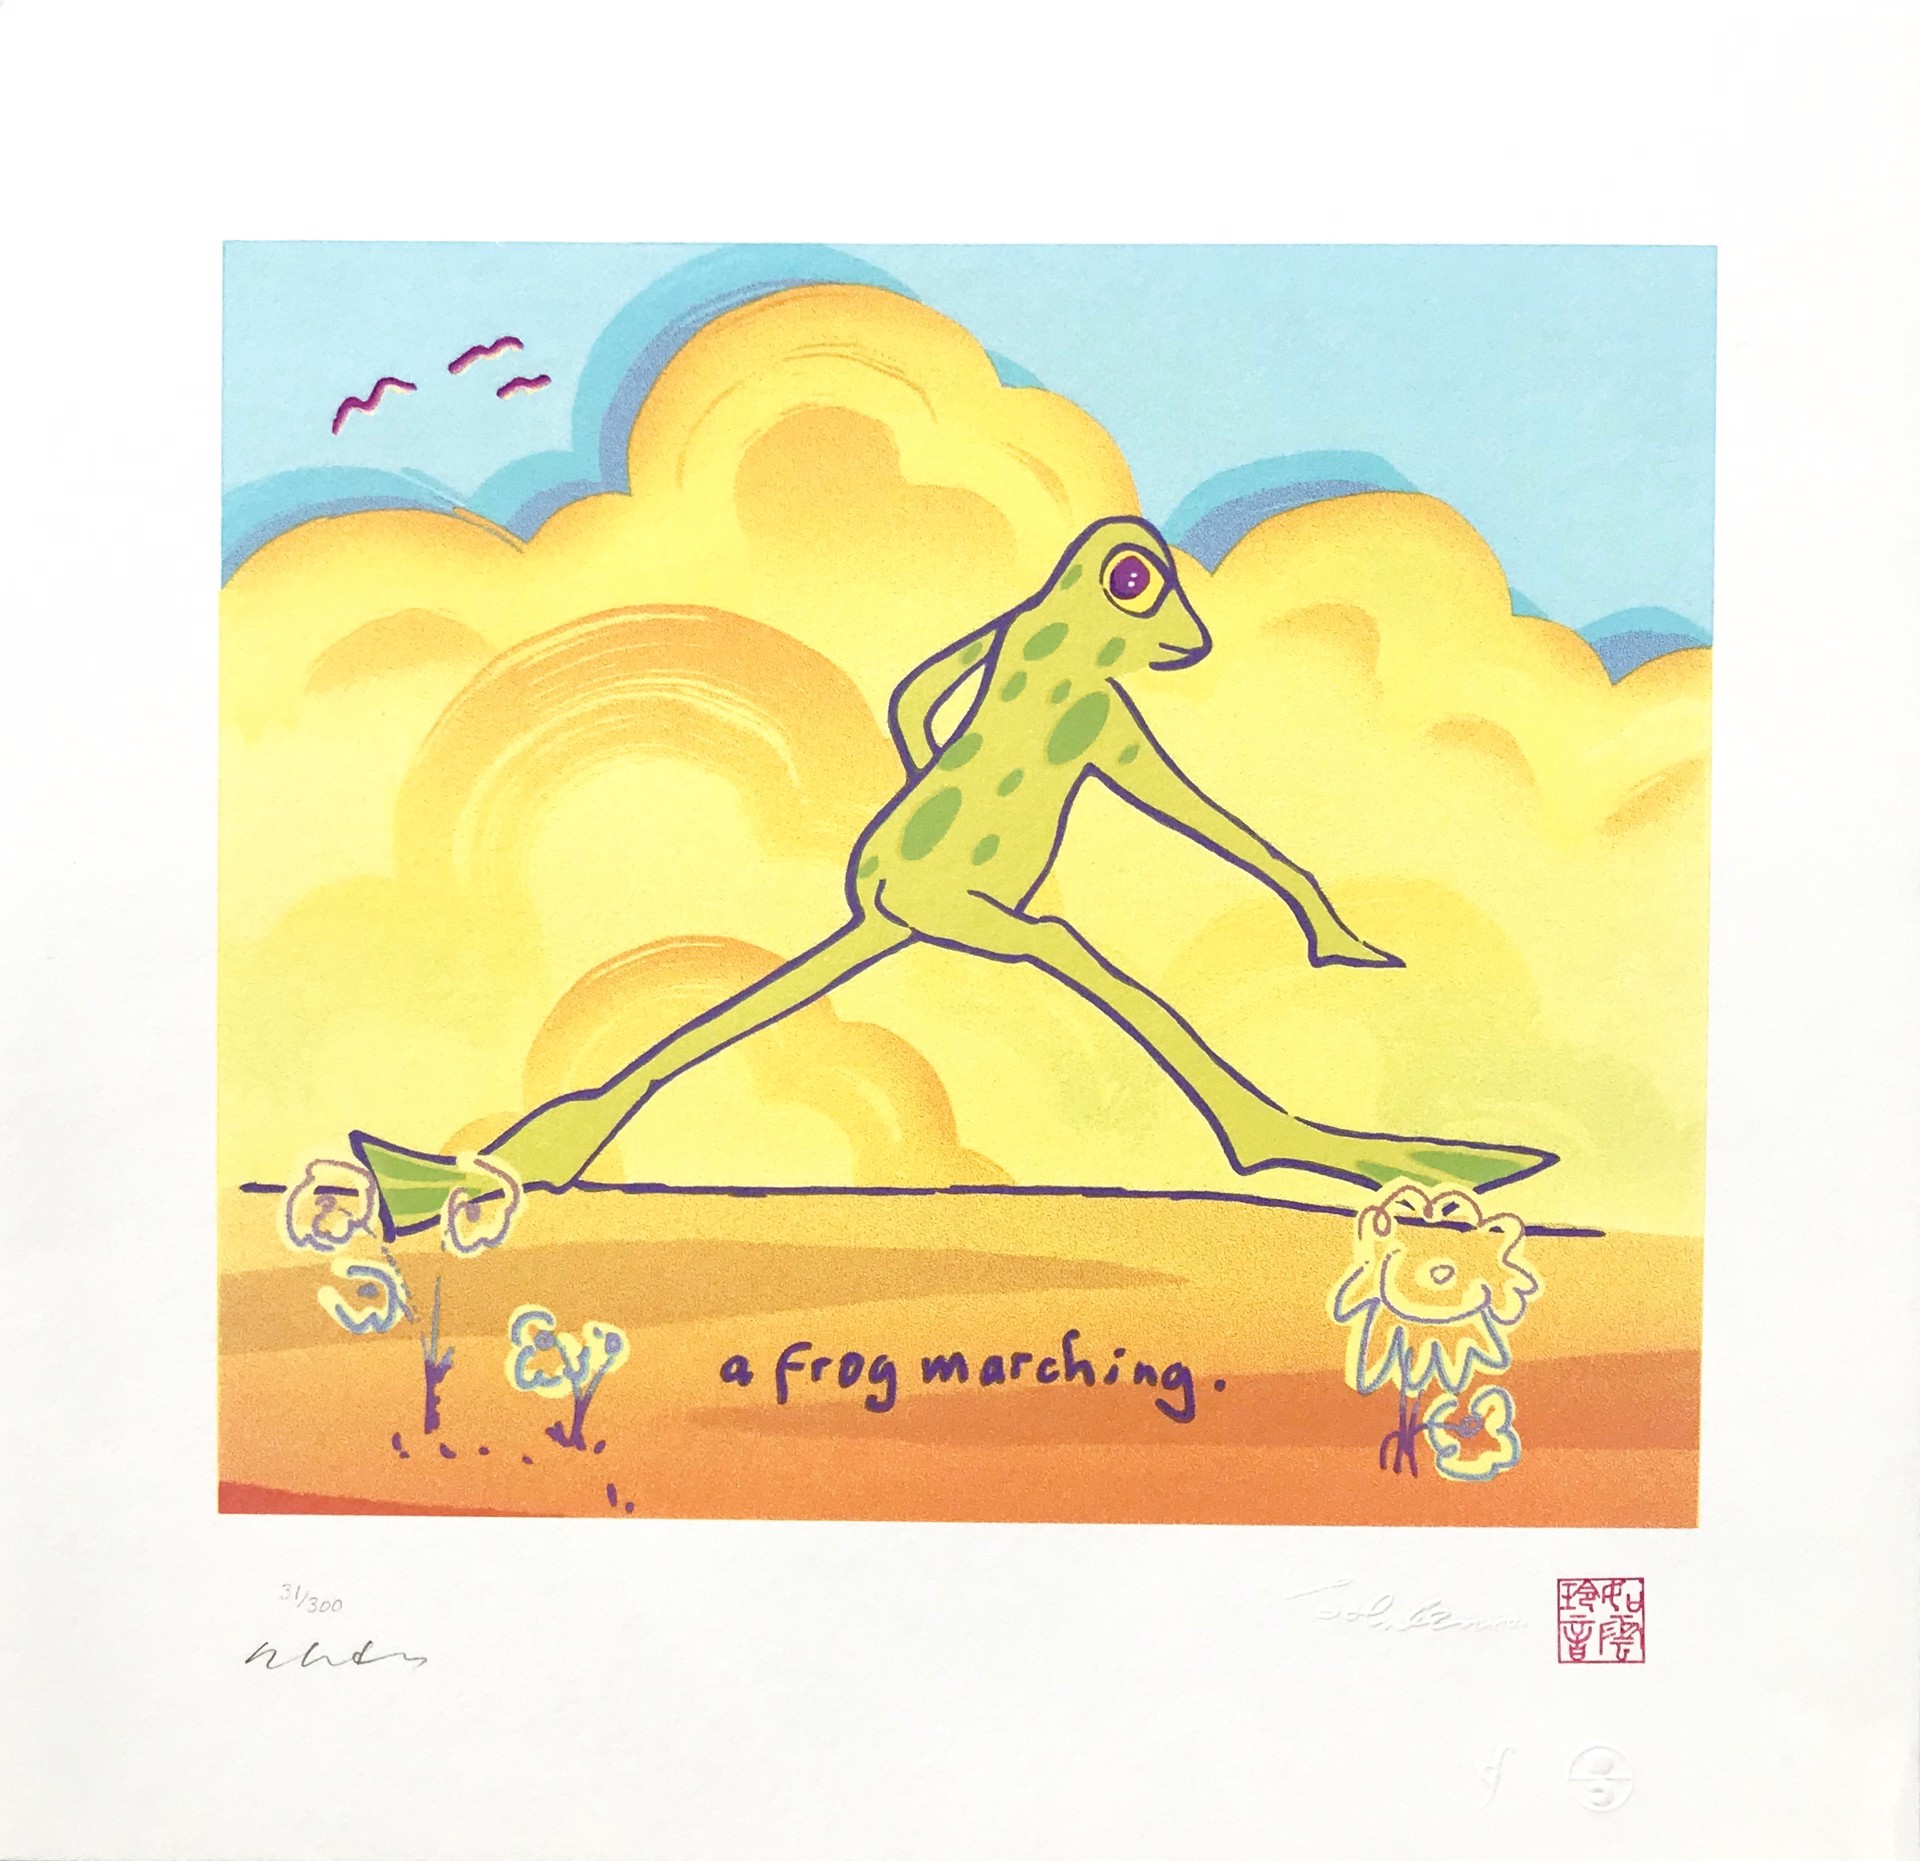 A Frog Marching by John Lennon